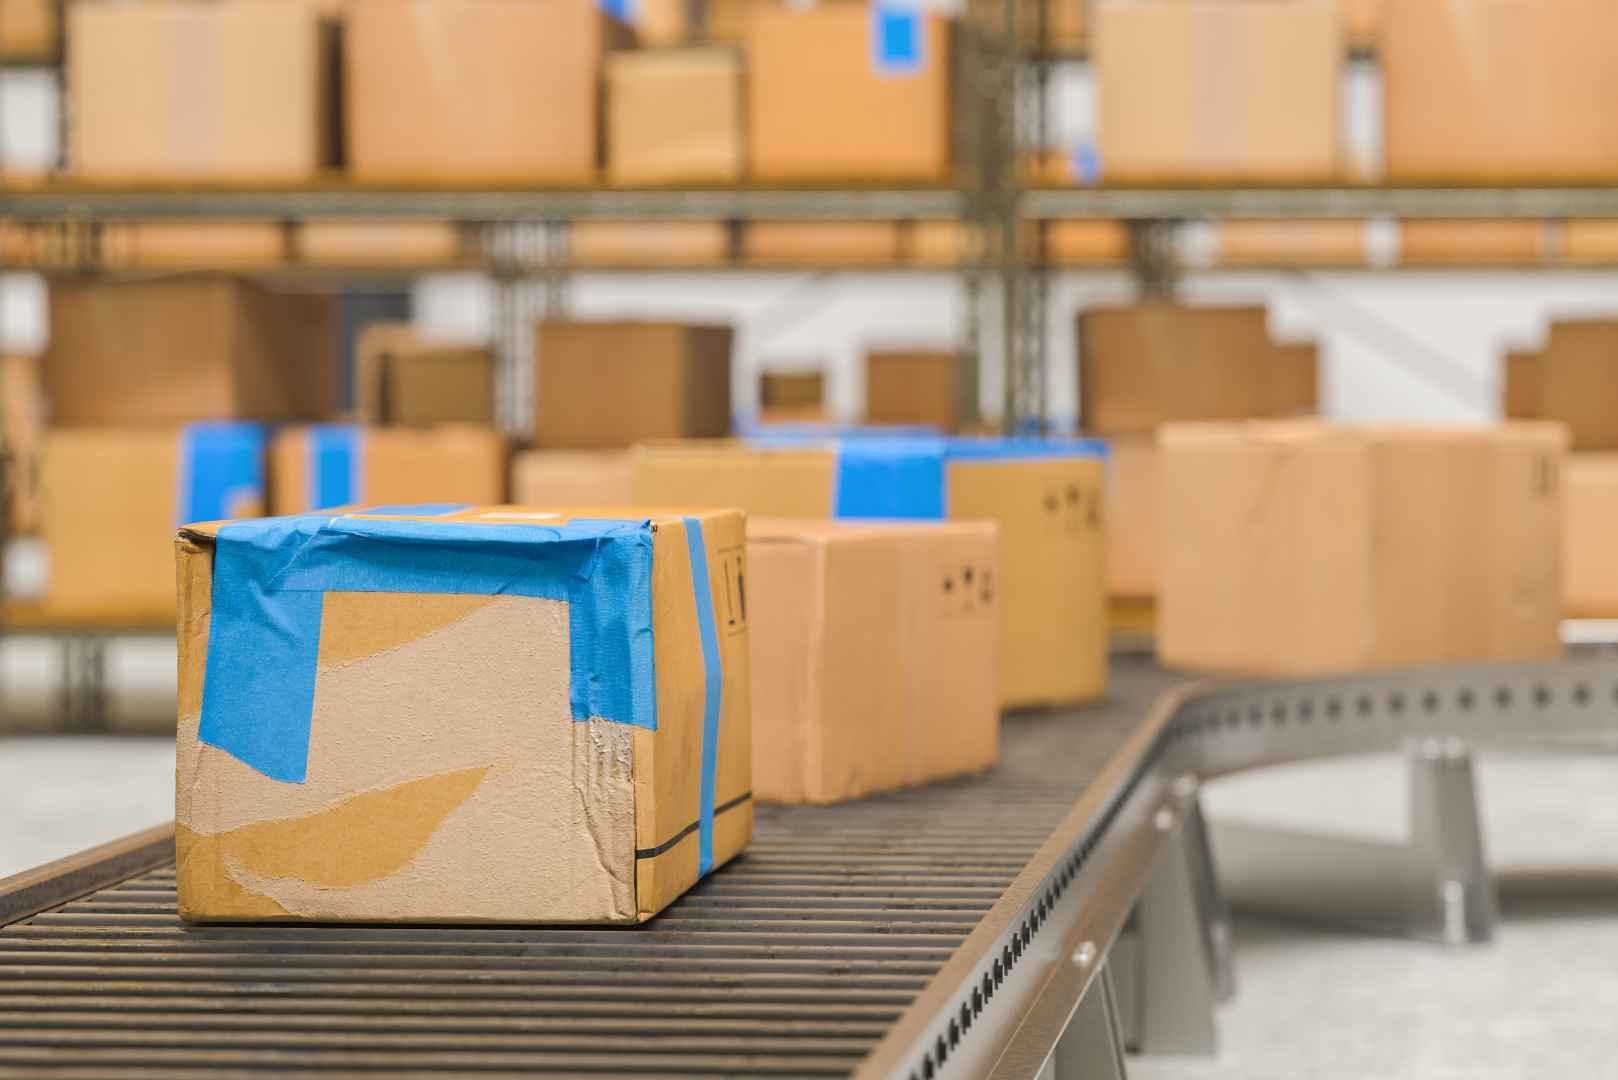 parcels in conveyor belt in distribution warehouse